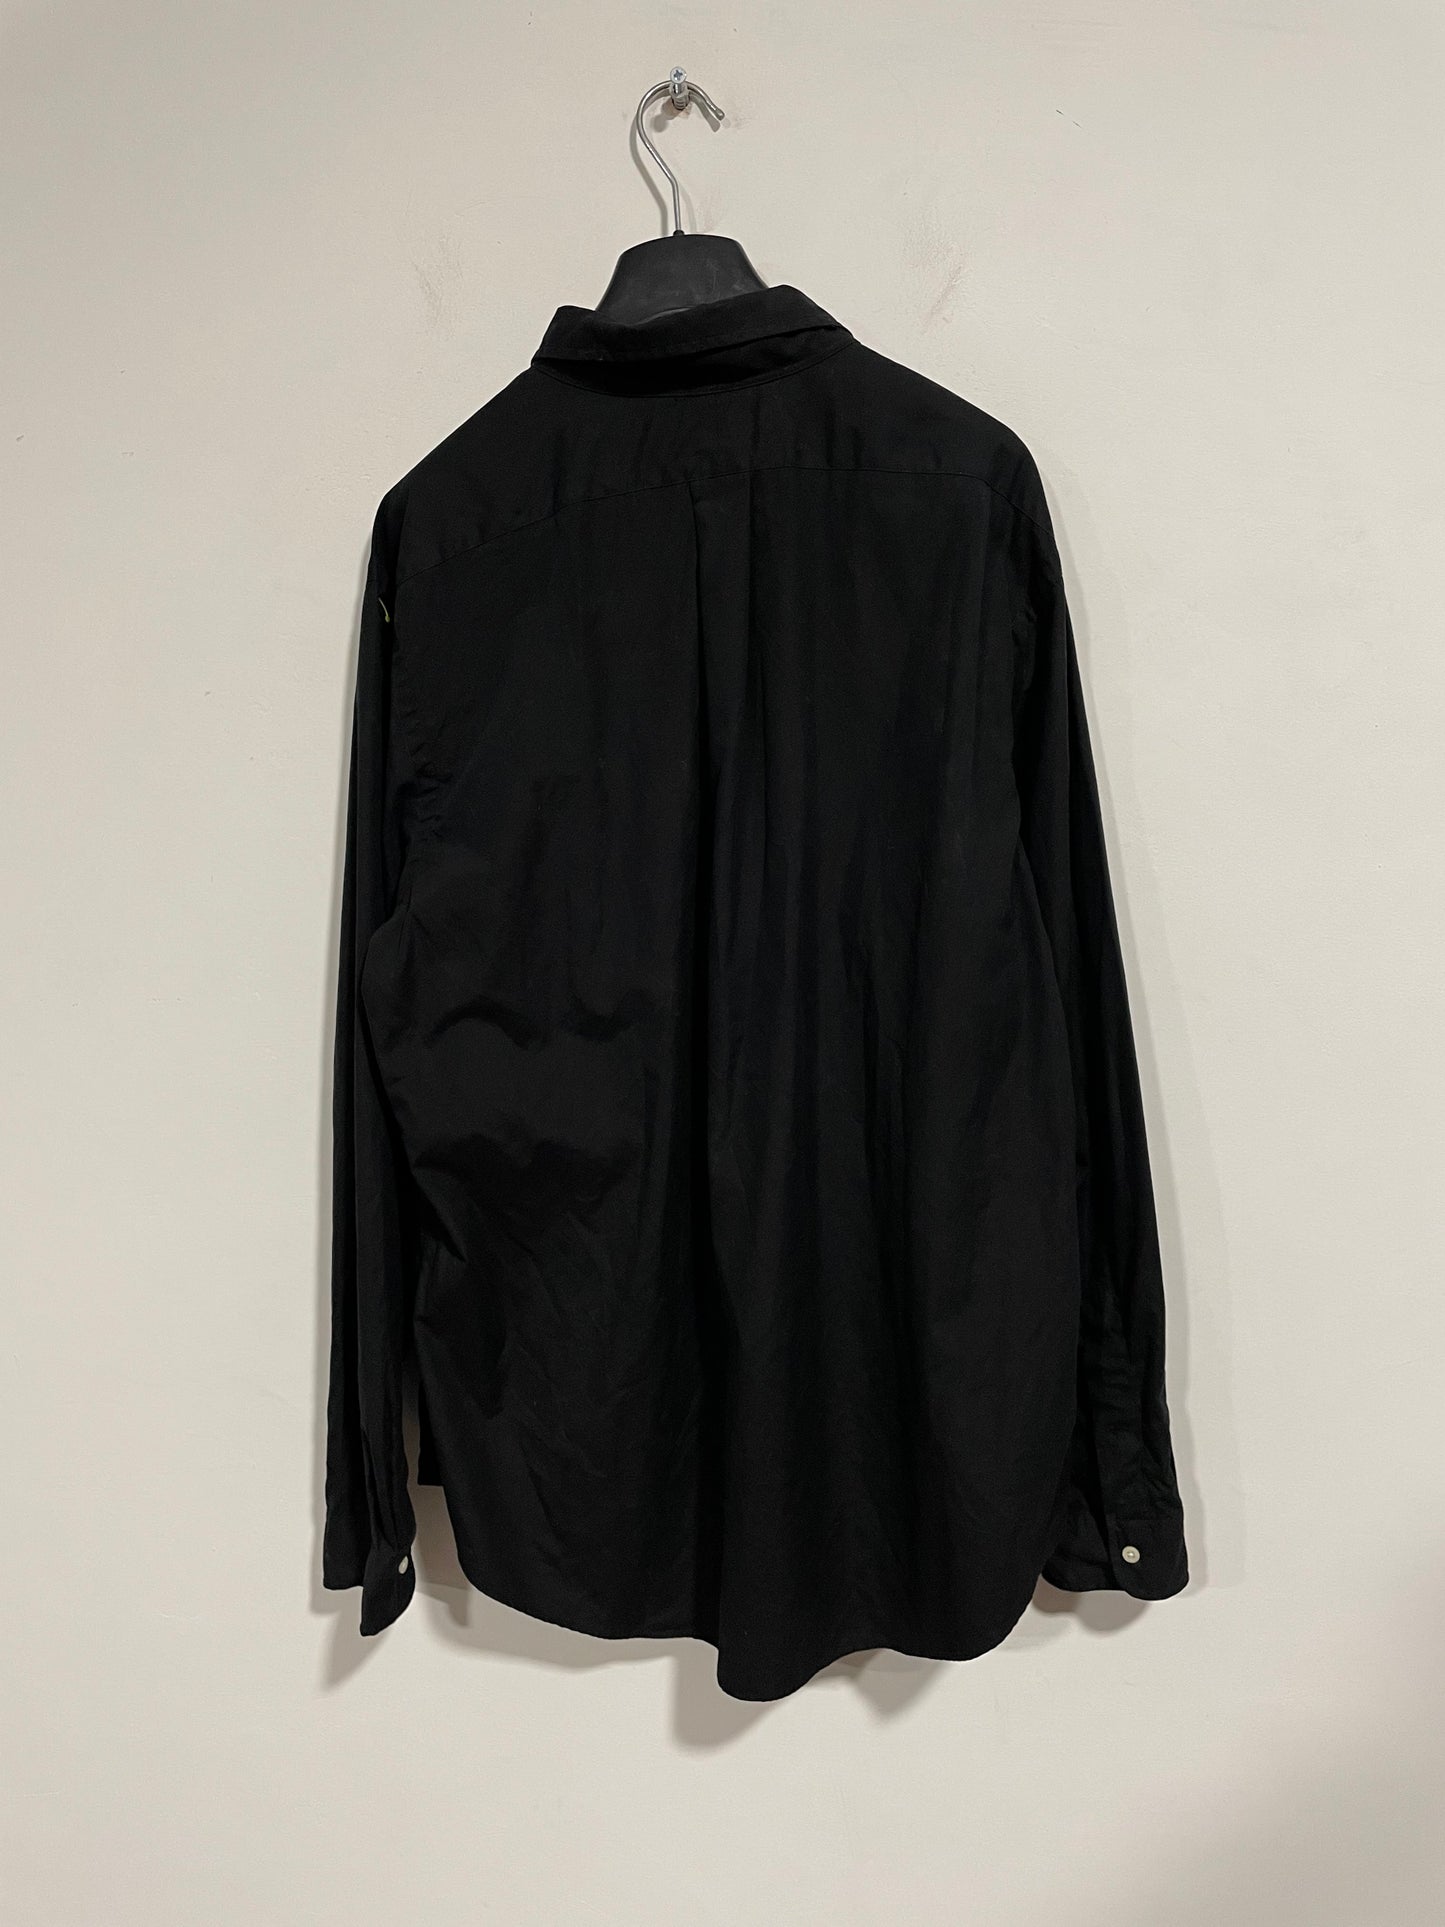 Camicia Ralph Lauren nera (C695)